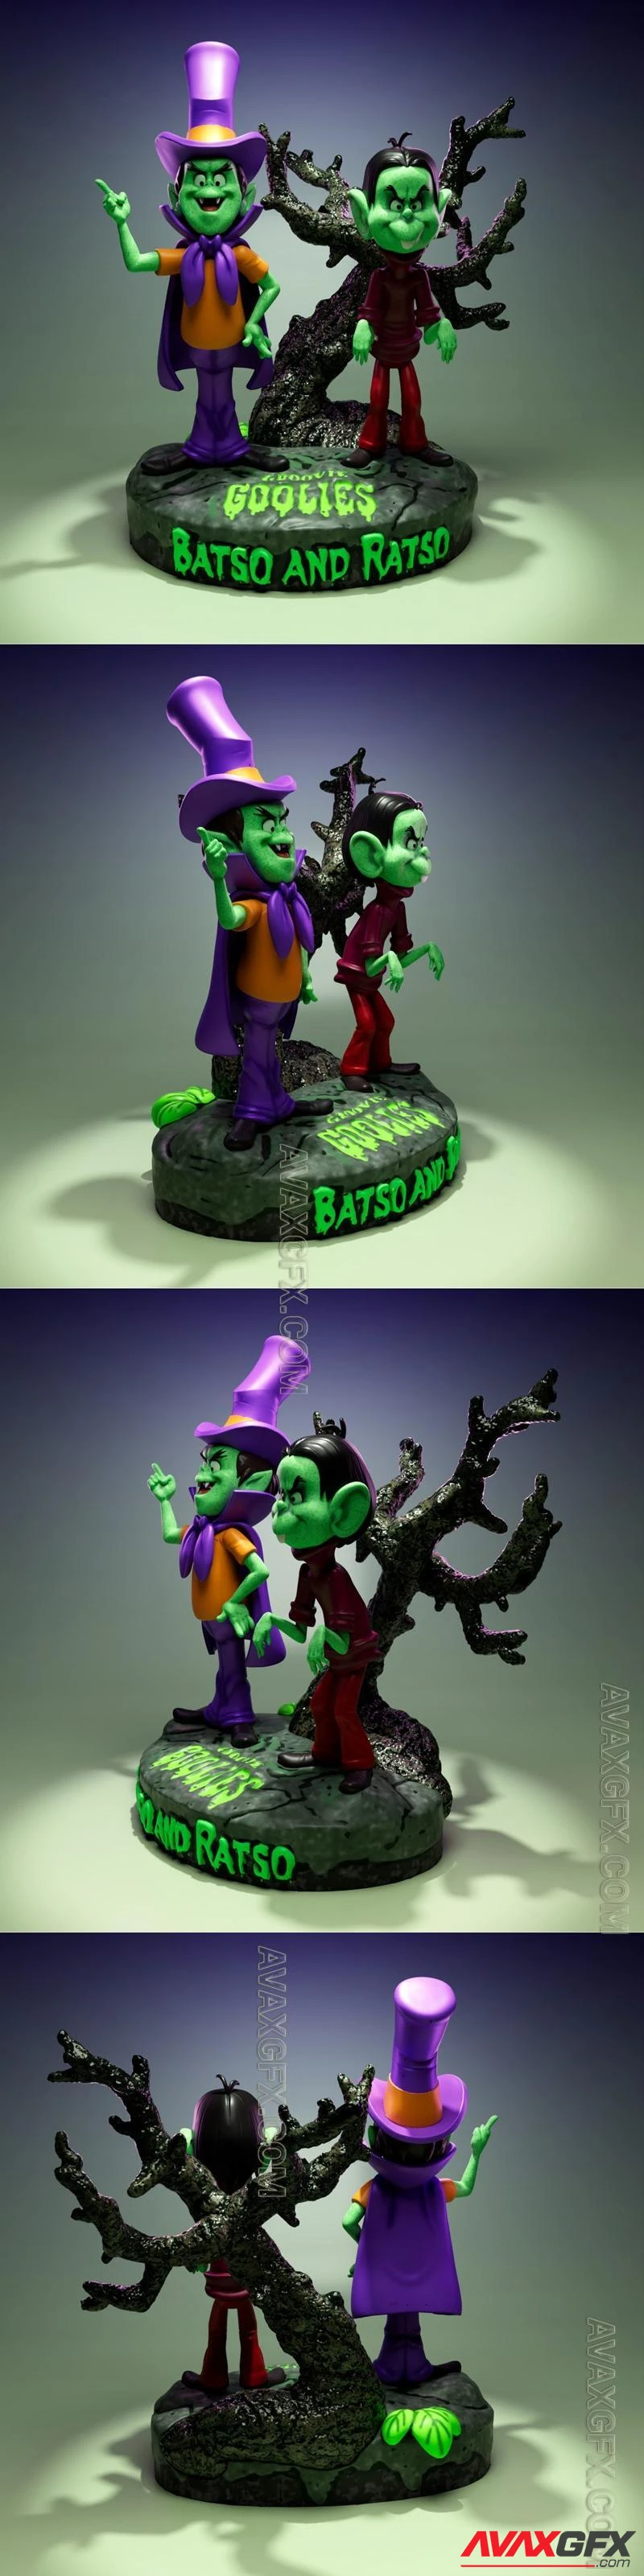 Batso and Ratso - Groovie Goolies - STL 3D Model